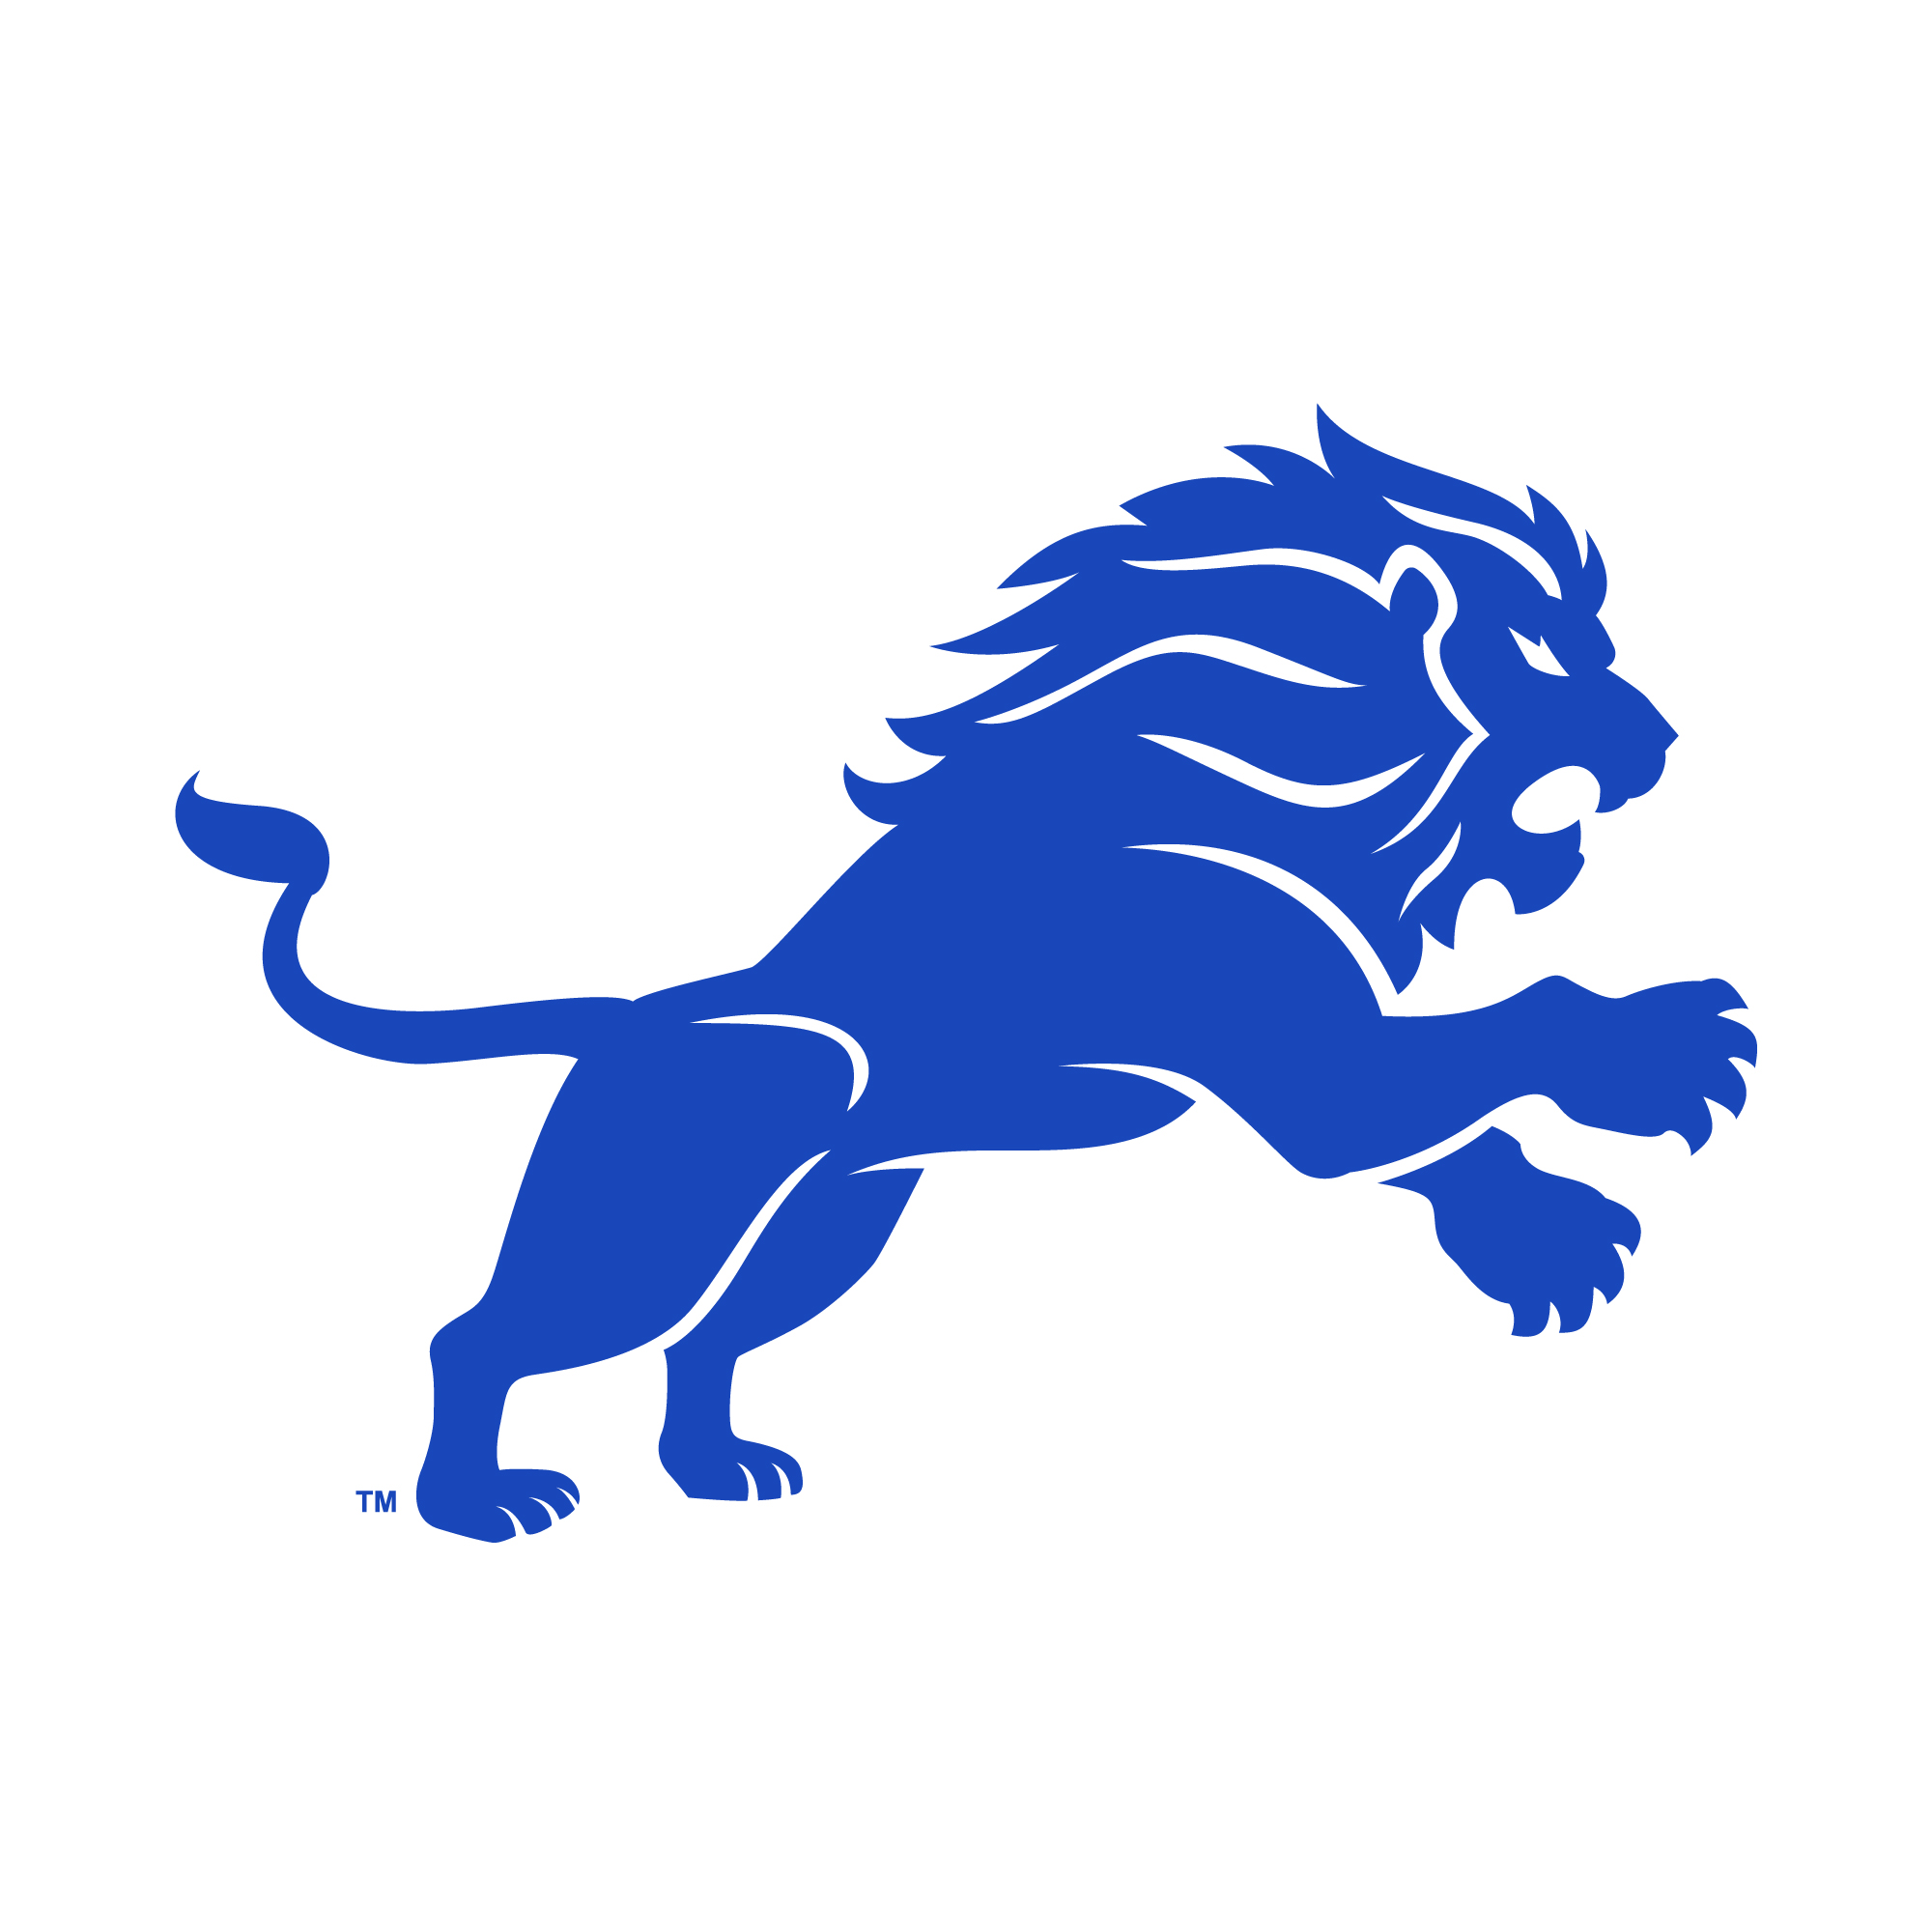 School mascot, the lion